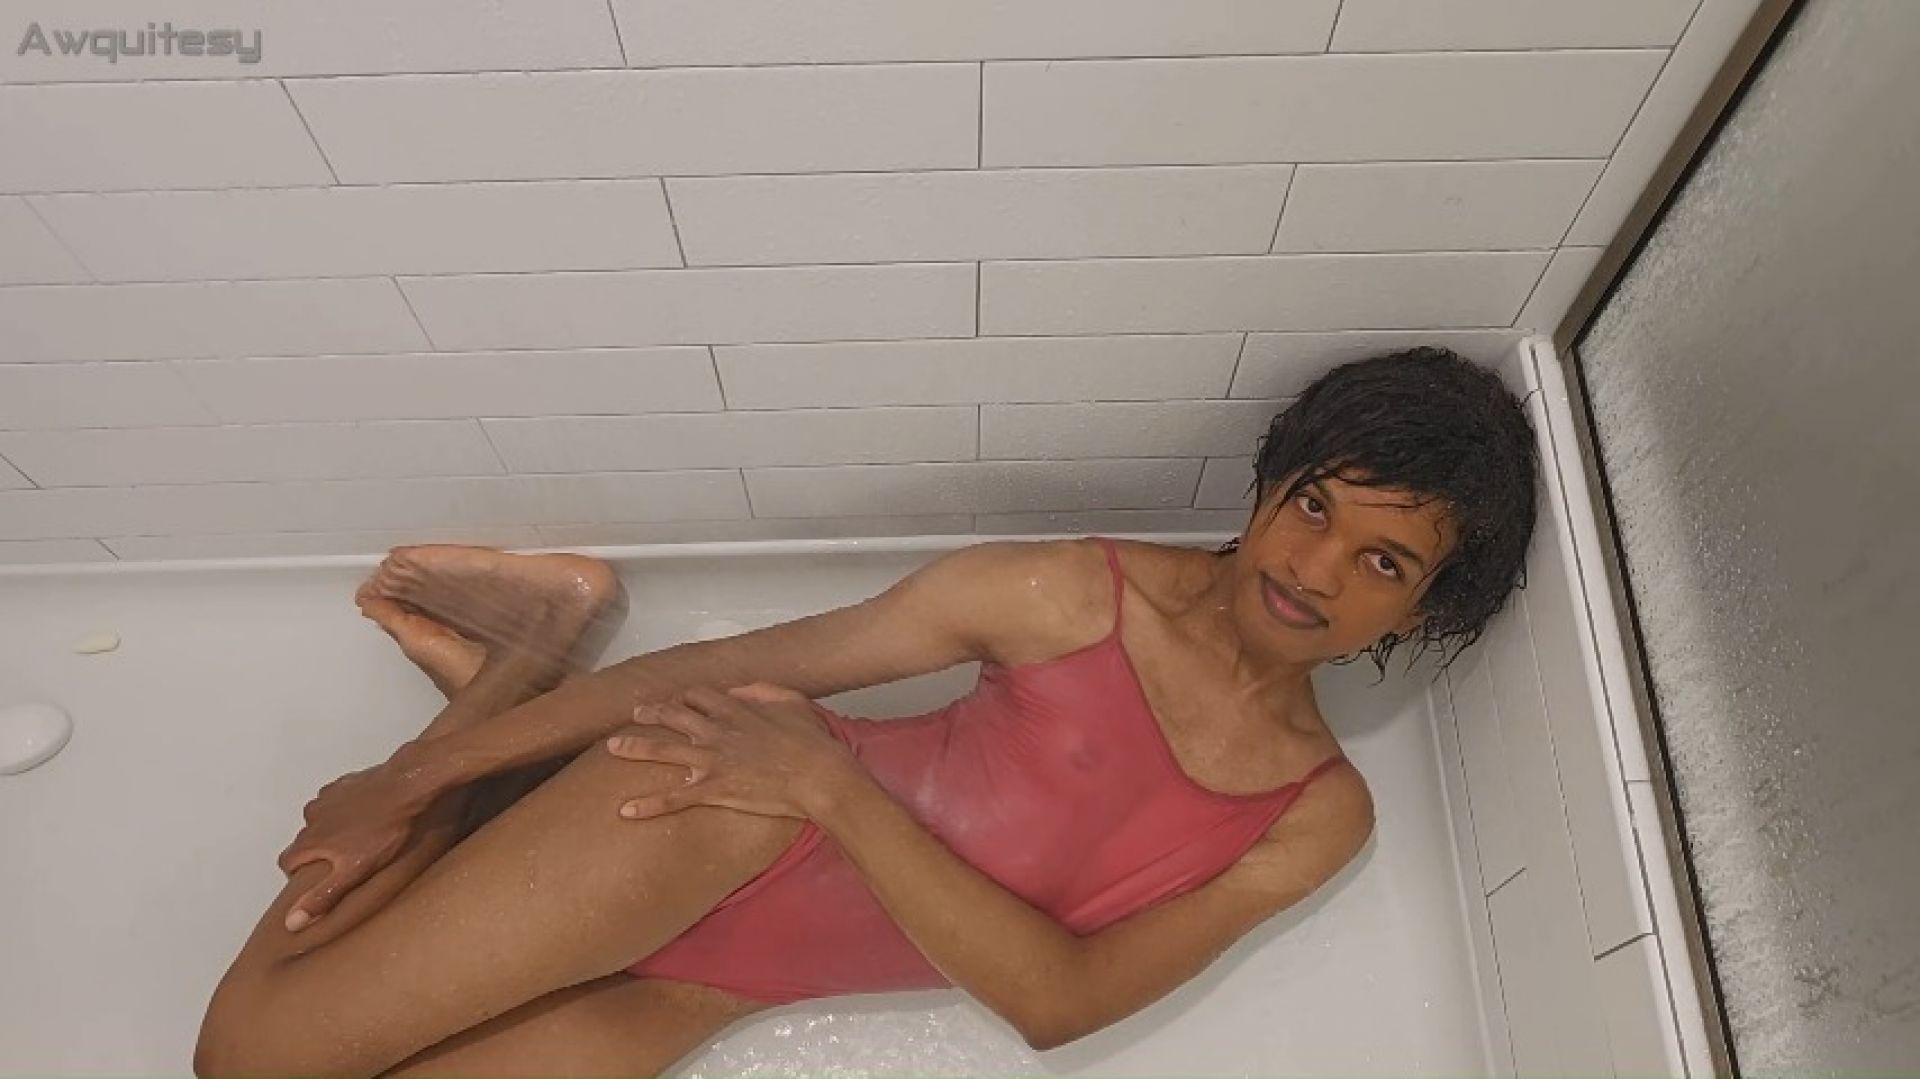 Femboy Tgirl Gone Wet: Sexy Sissy Girl eats her CUM in Bath